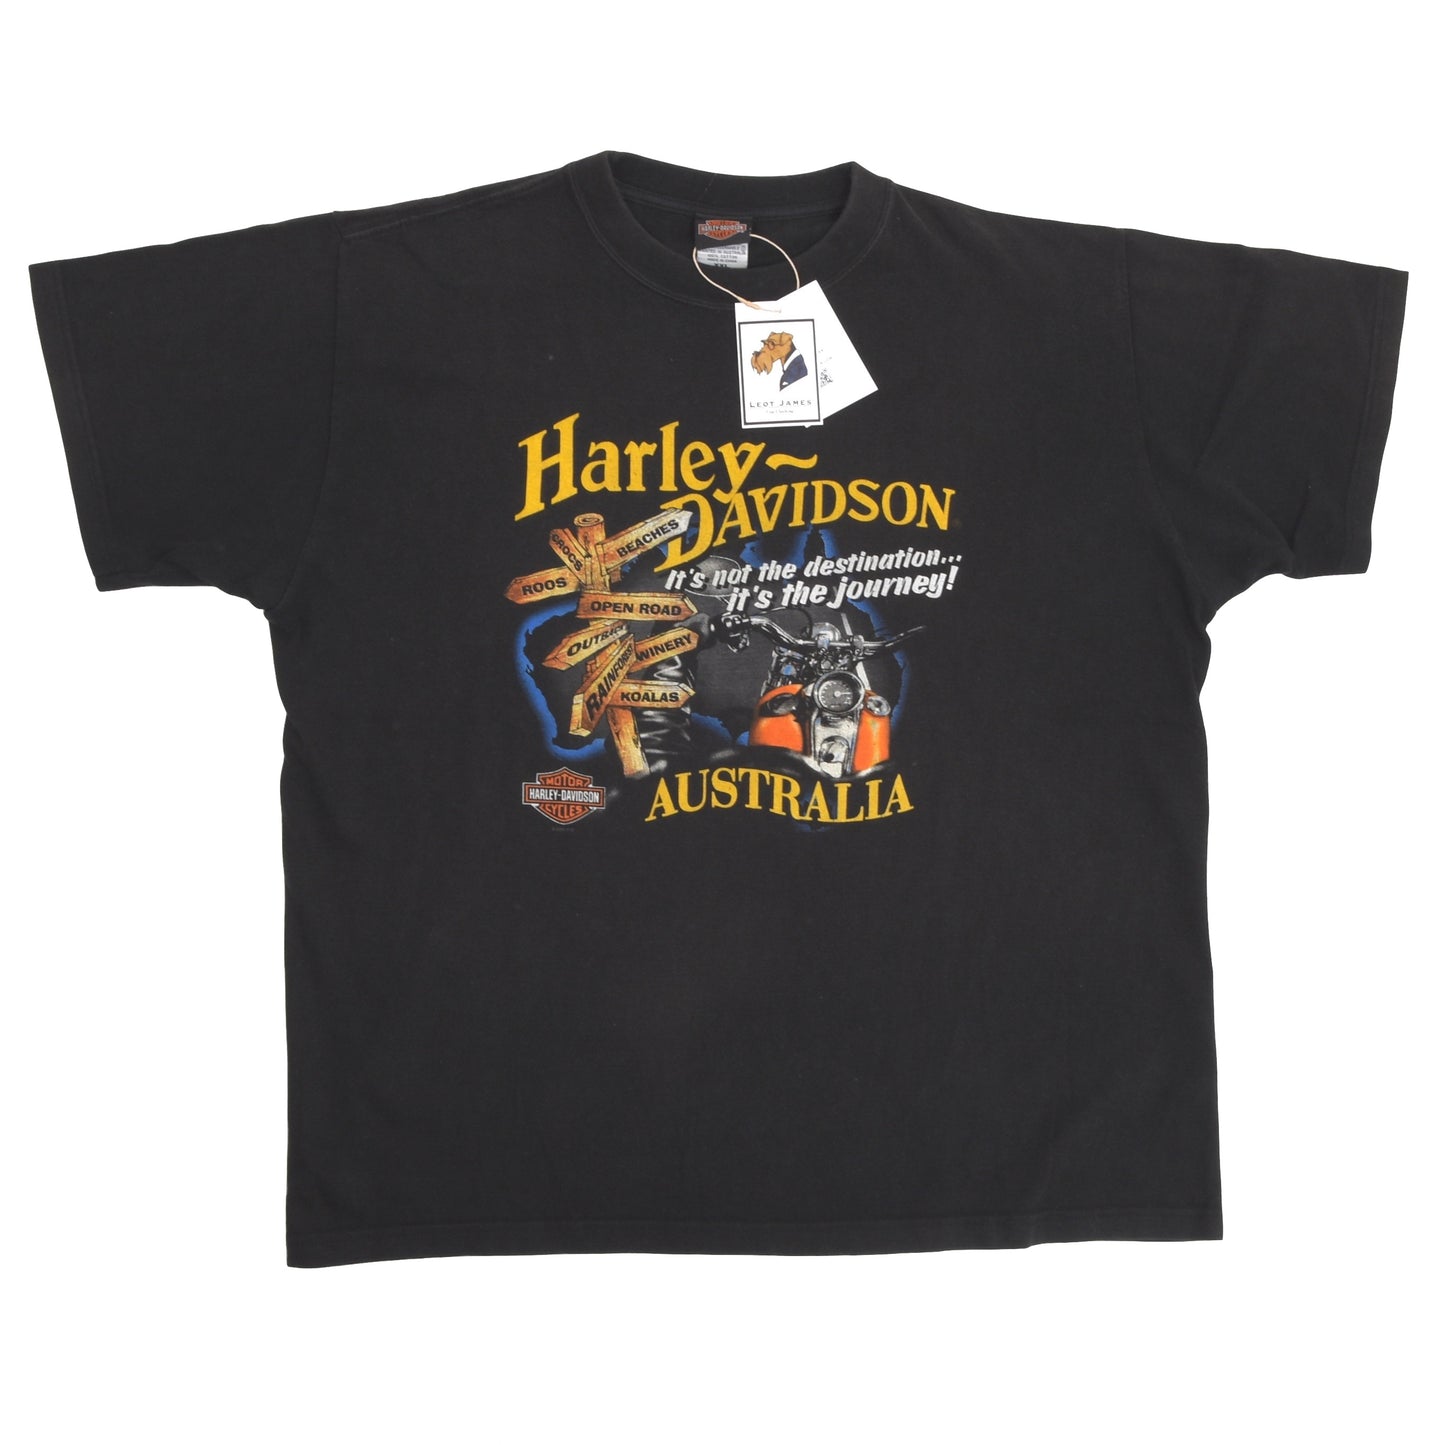 Harley-Davidson Australia T-Shirt Size XXL - Black